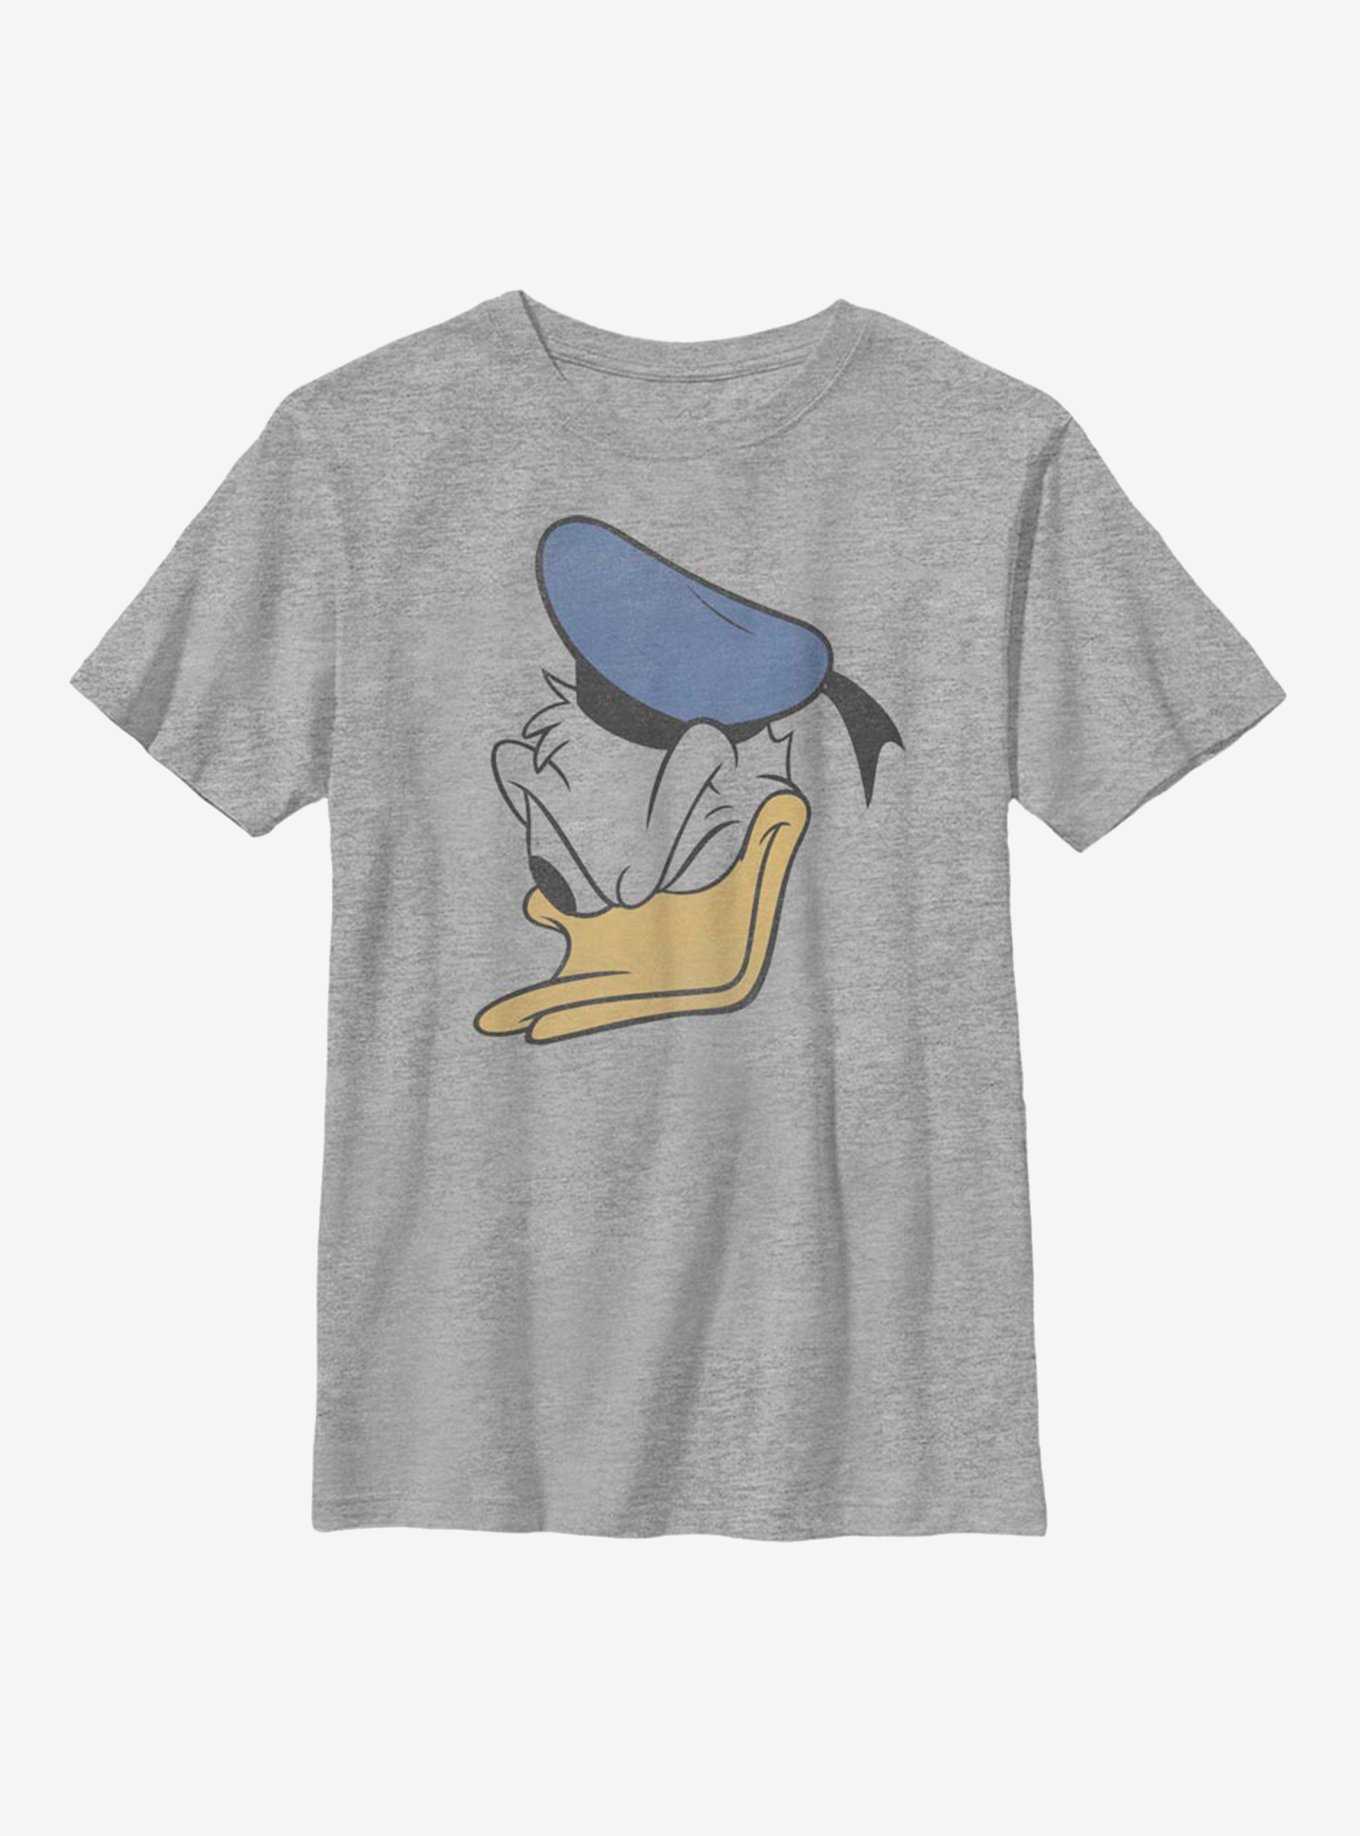 Disney Donald Duck Wink Youth T-Shirt, , hi-res